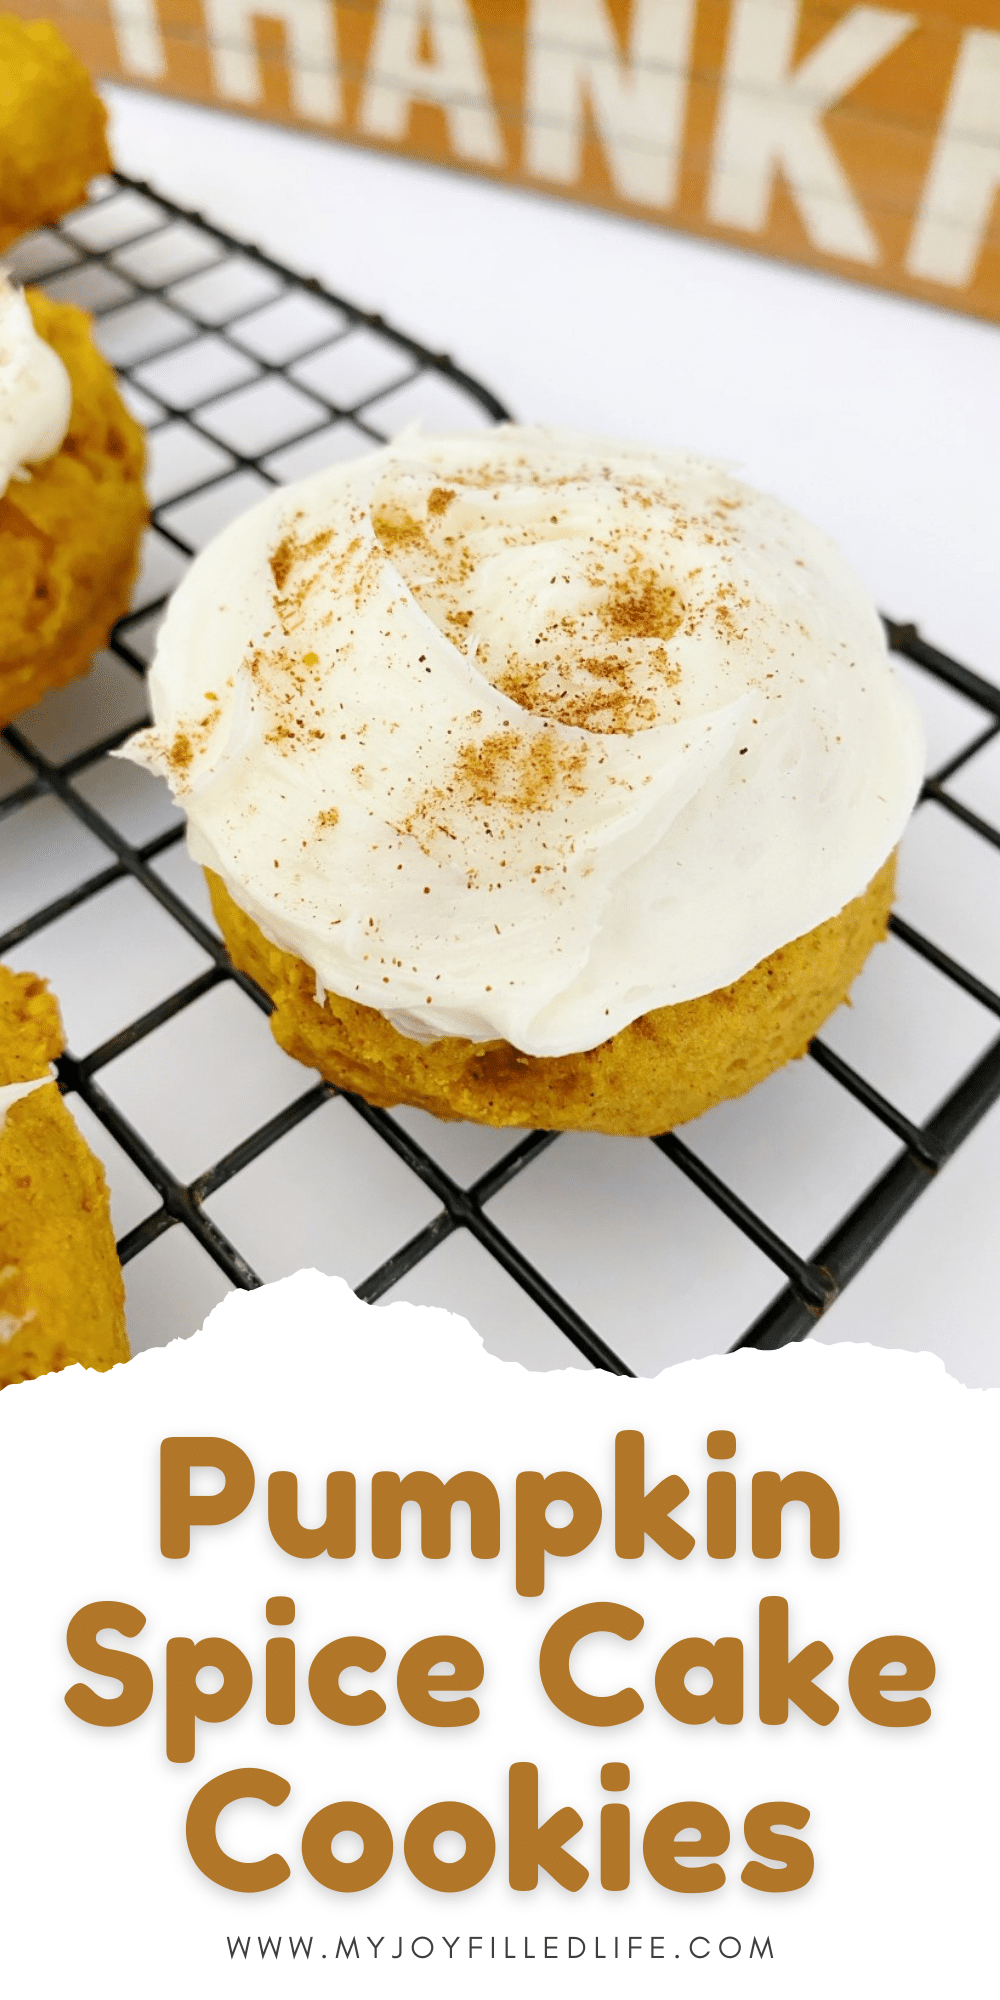 Pumpkin Spice Cookies Pinterest Image